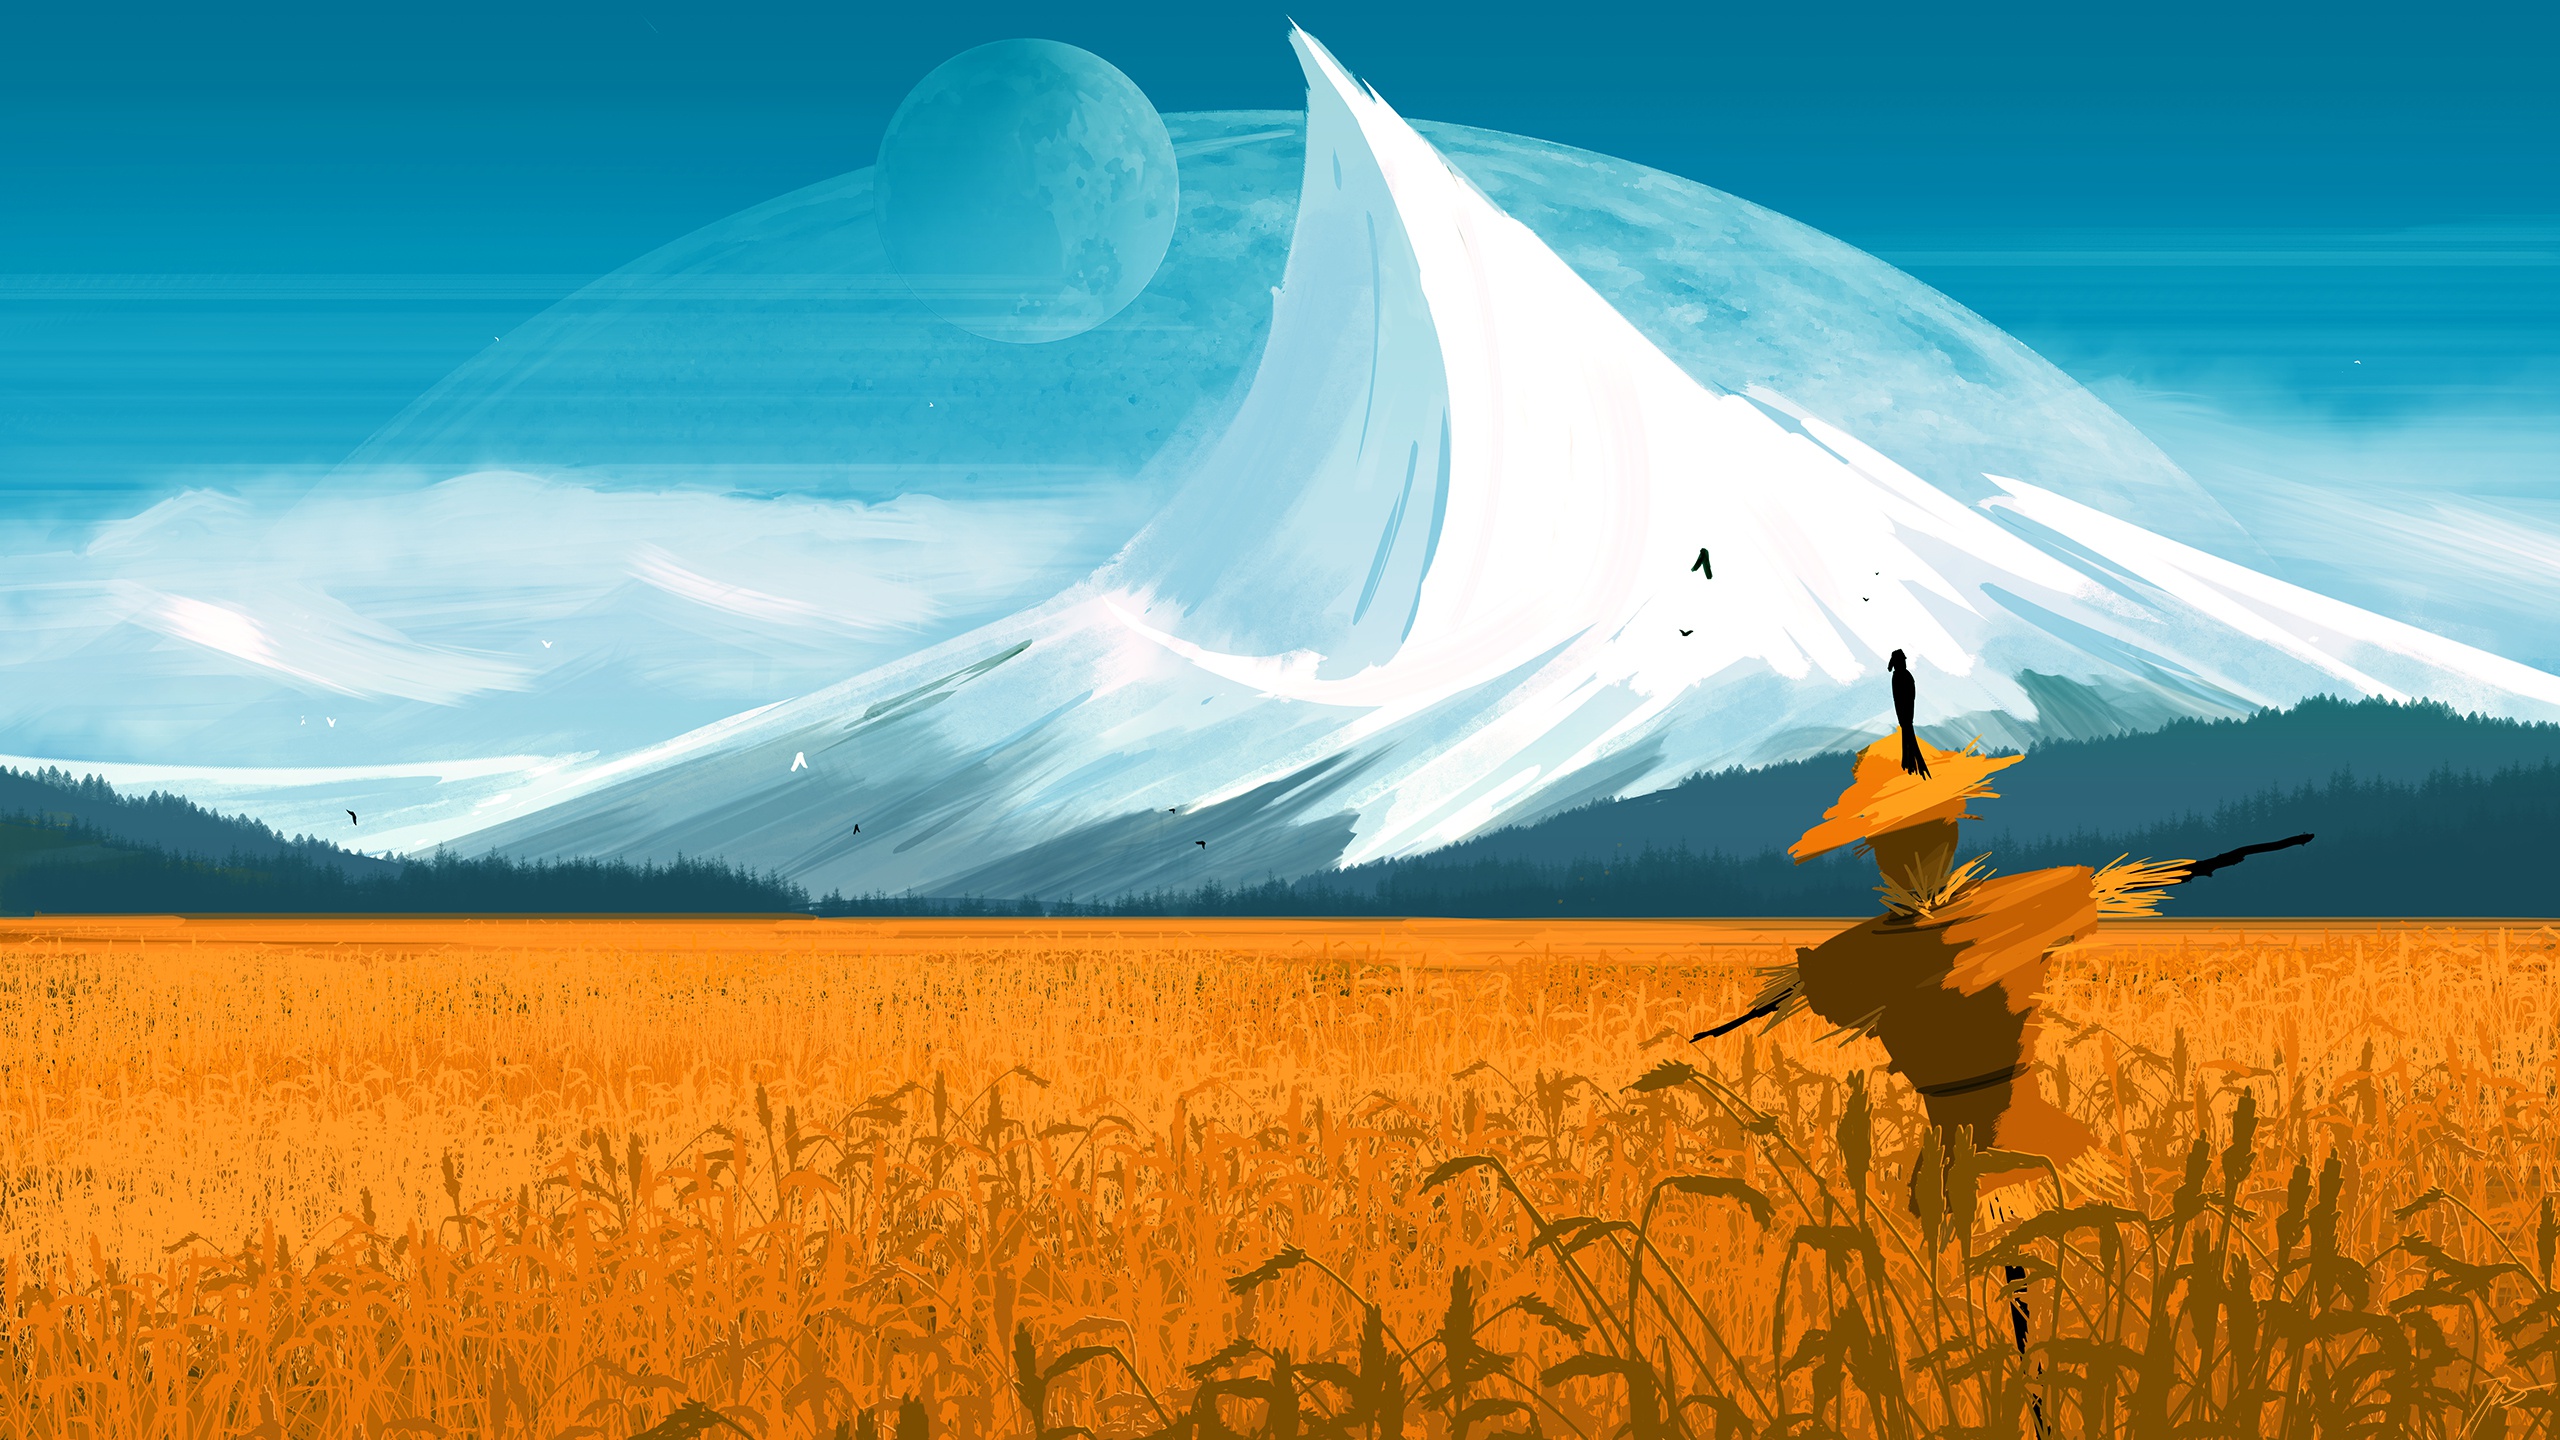 planet, sci fi, landscape, field, mountain, peak, scarecrow